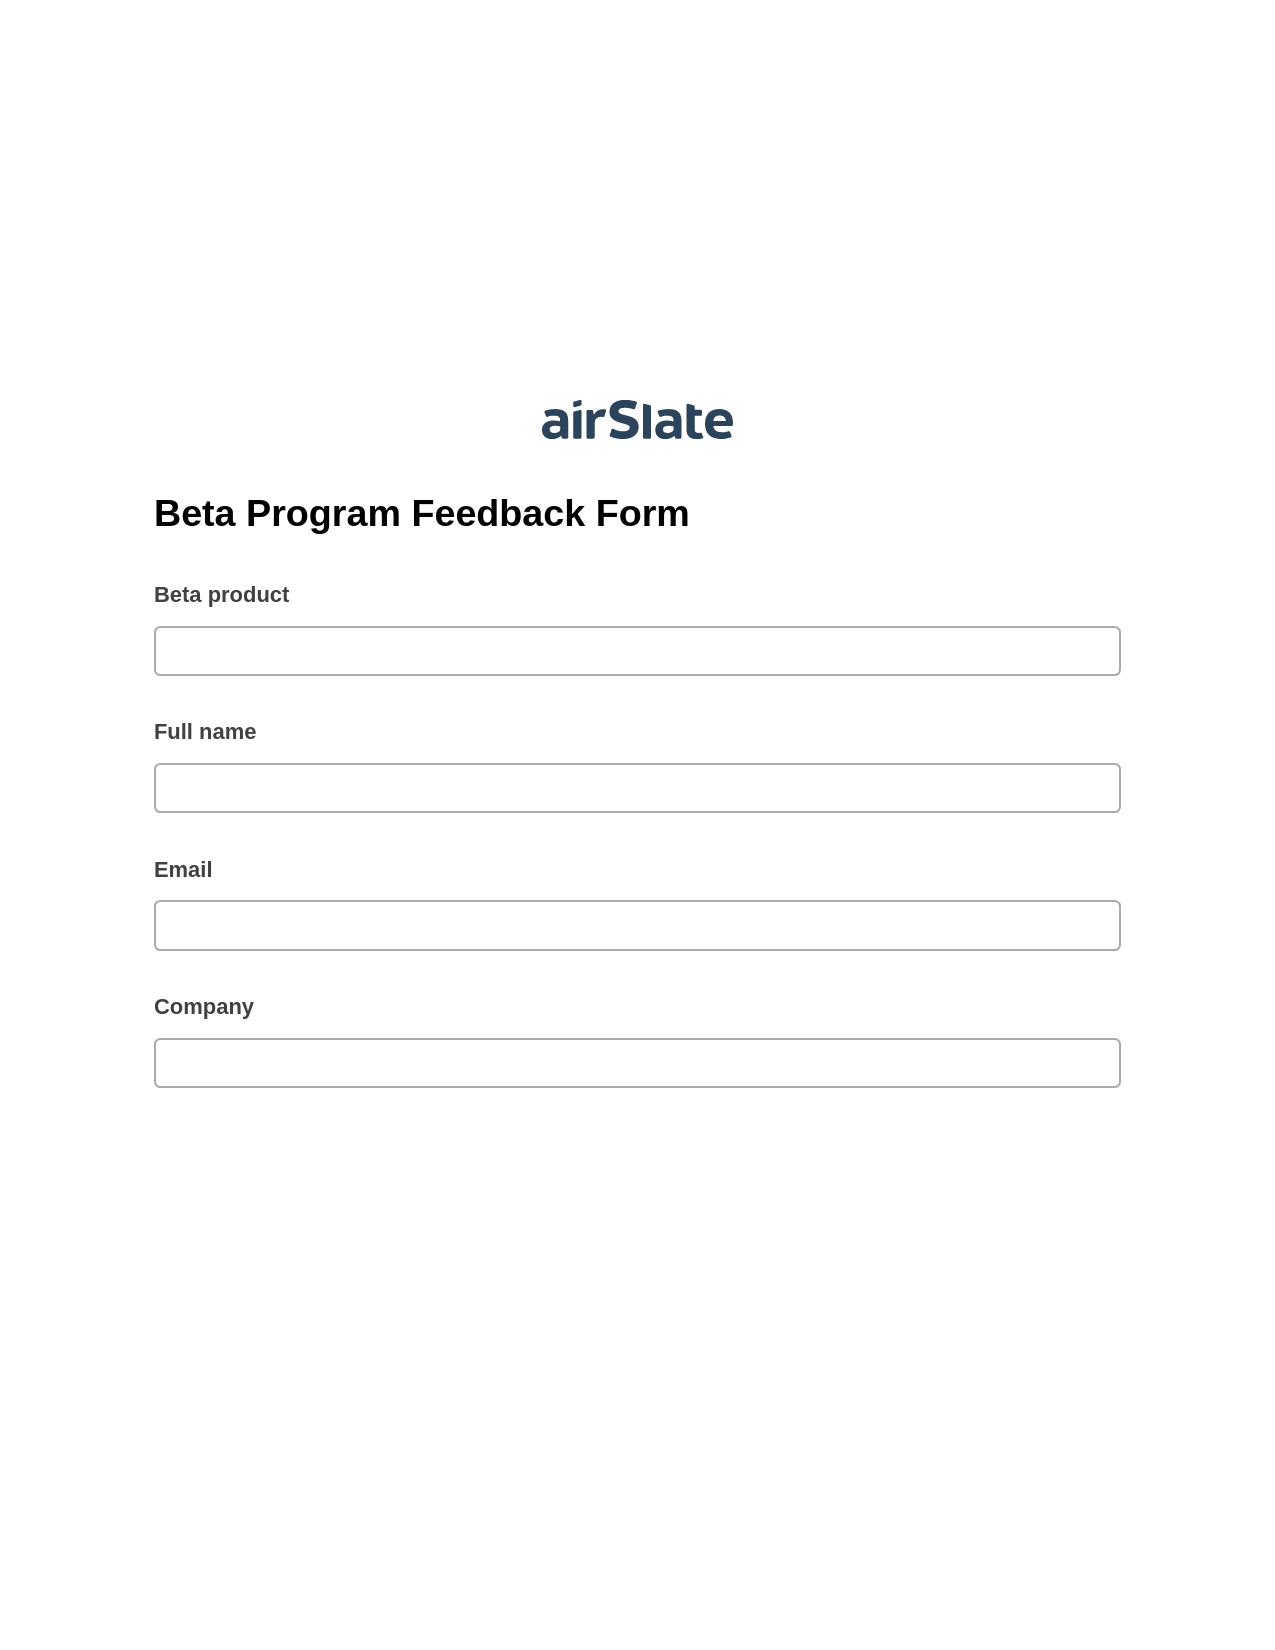 Beta Program Feedback Form Pre-fill Document Bot, Webhook Bot, Dropbox Bot